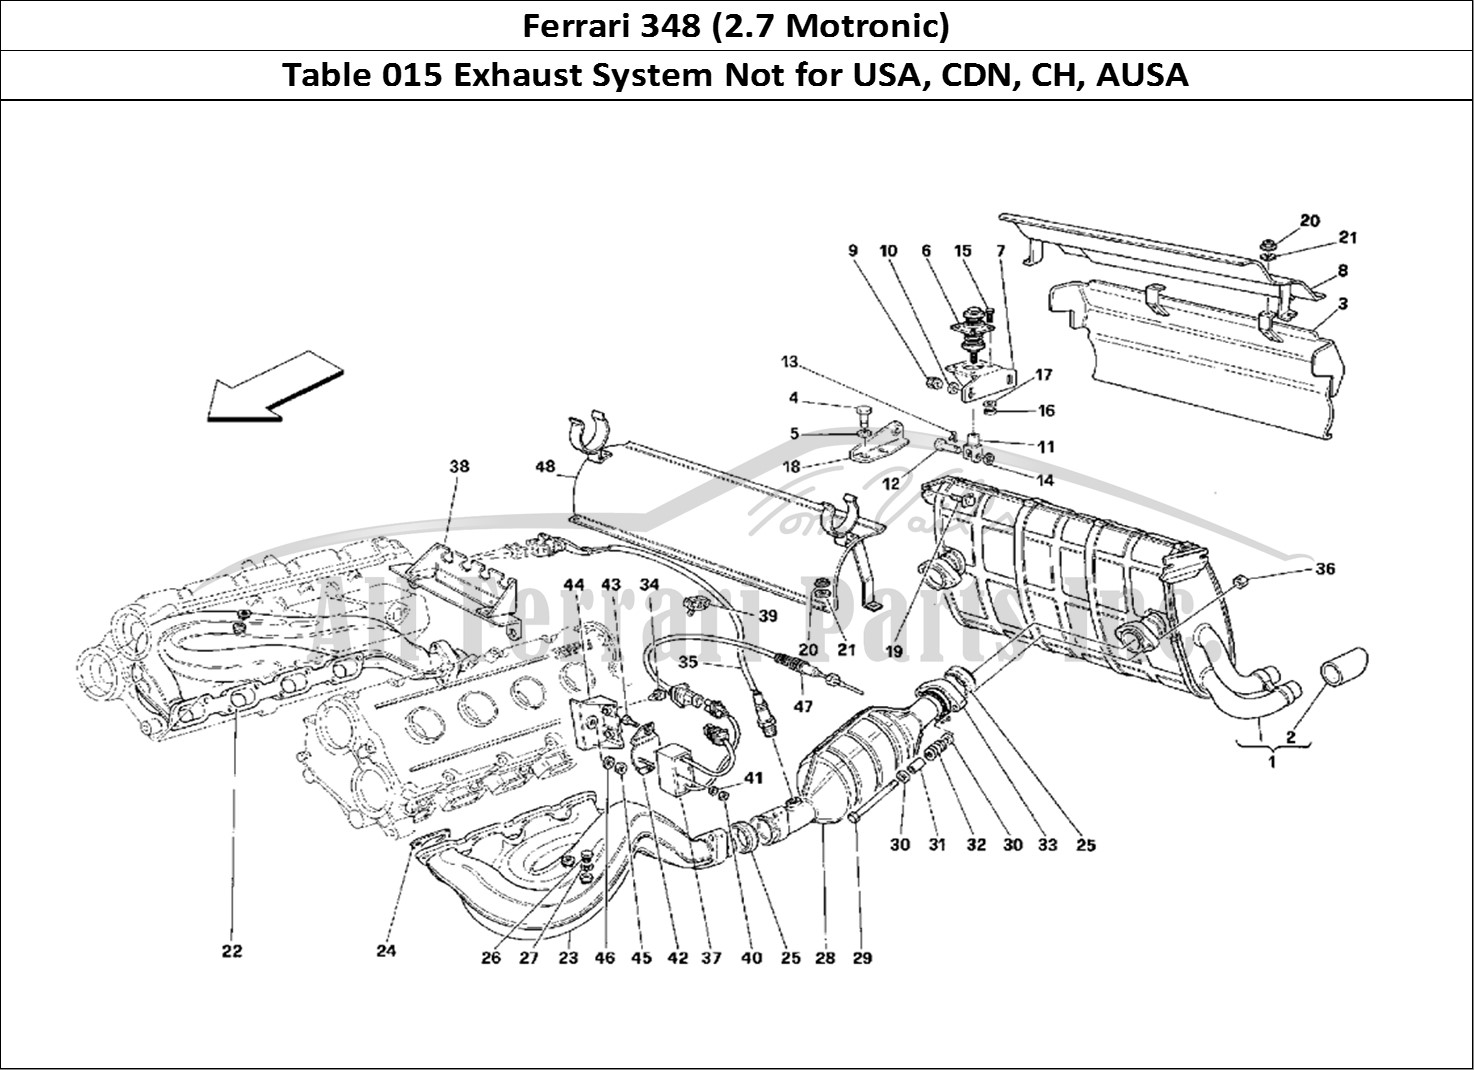 Ferrari Parts Ferrari 348 (2.7 Motronic) Page 015 Exhaust System -Not for U